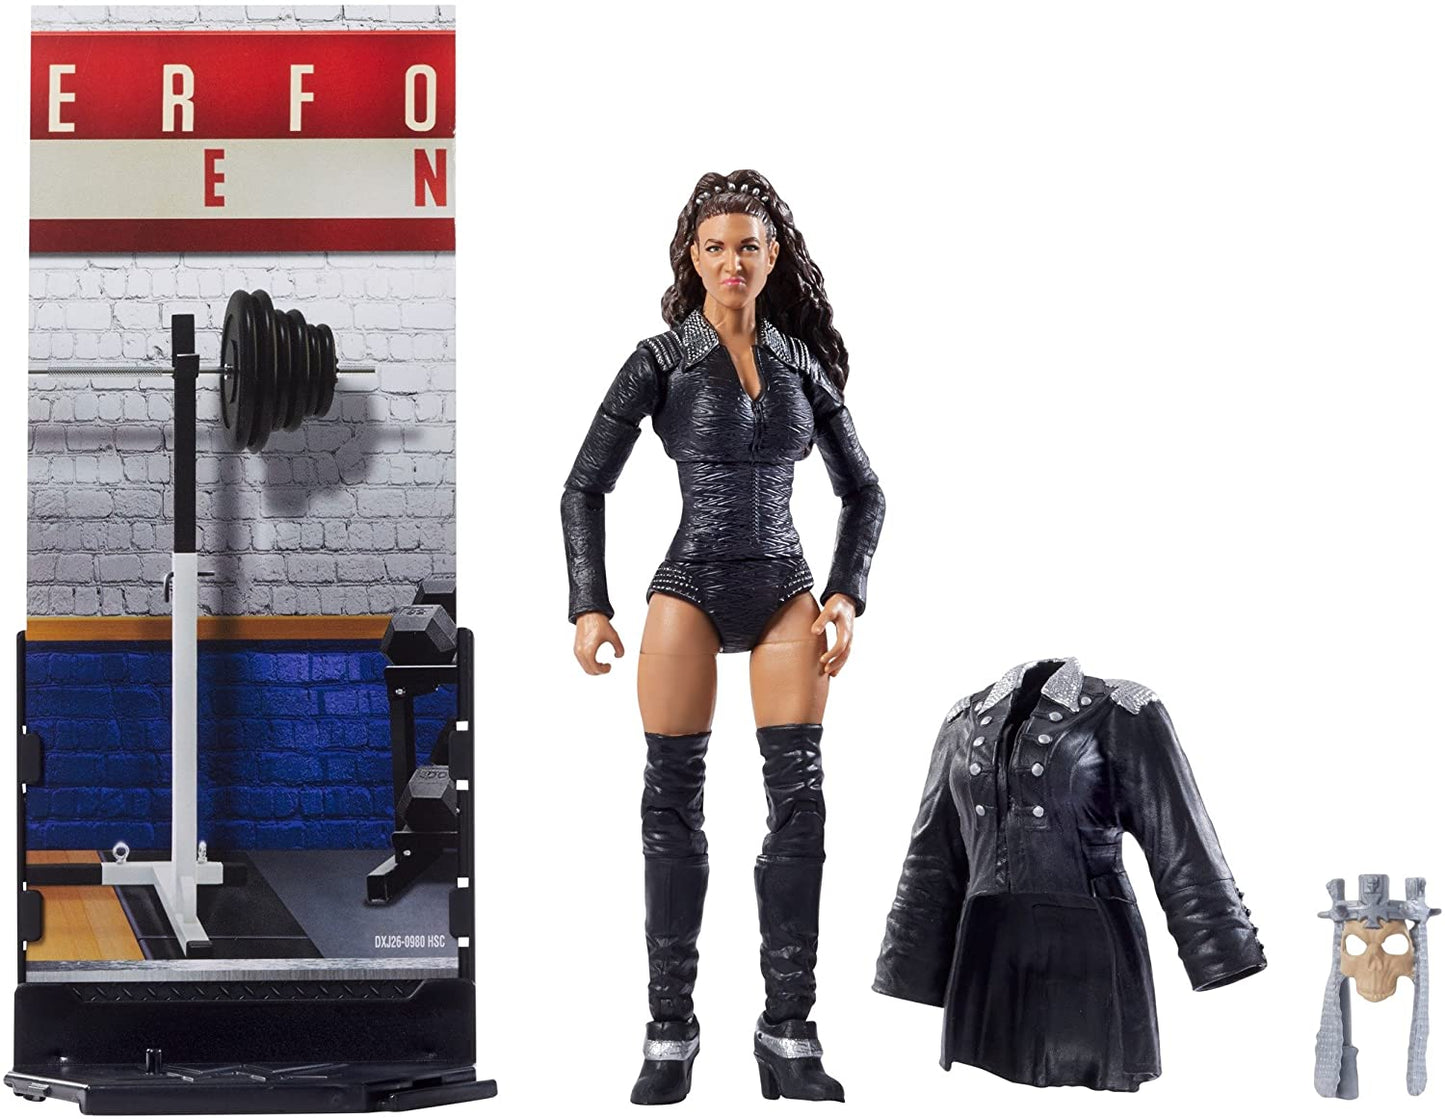 2017 WWE Mattel Elite Collection Series 50 Stephanie McMahon